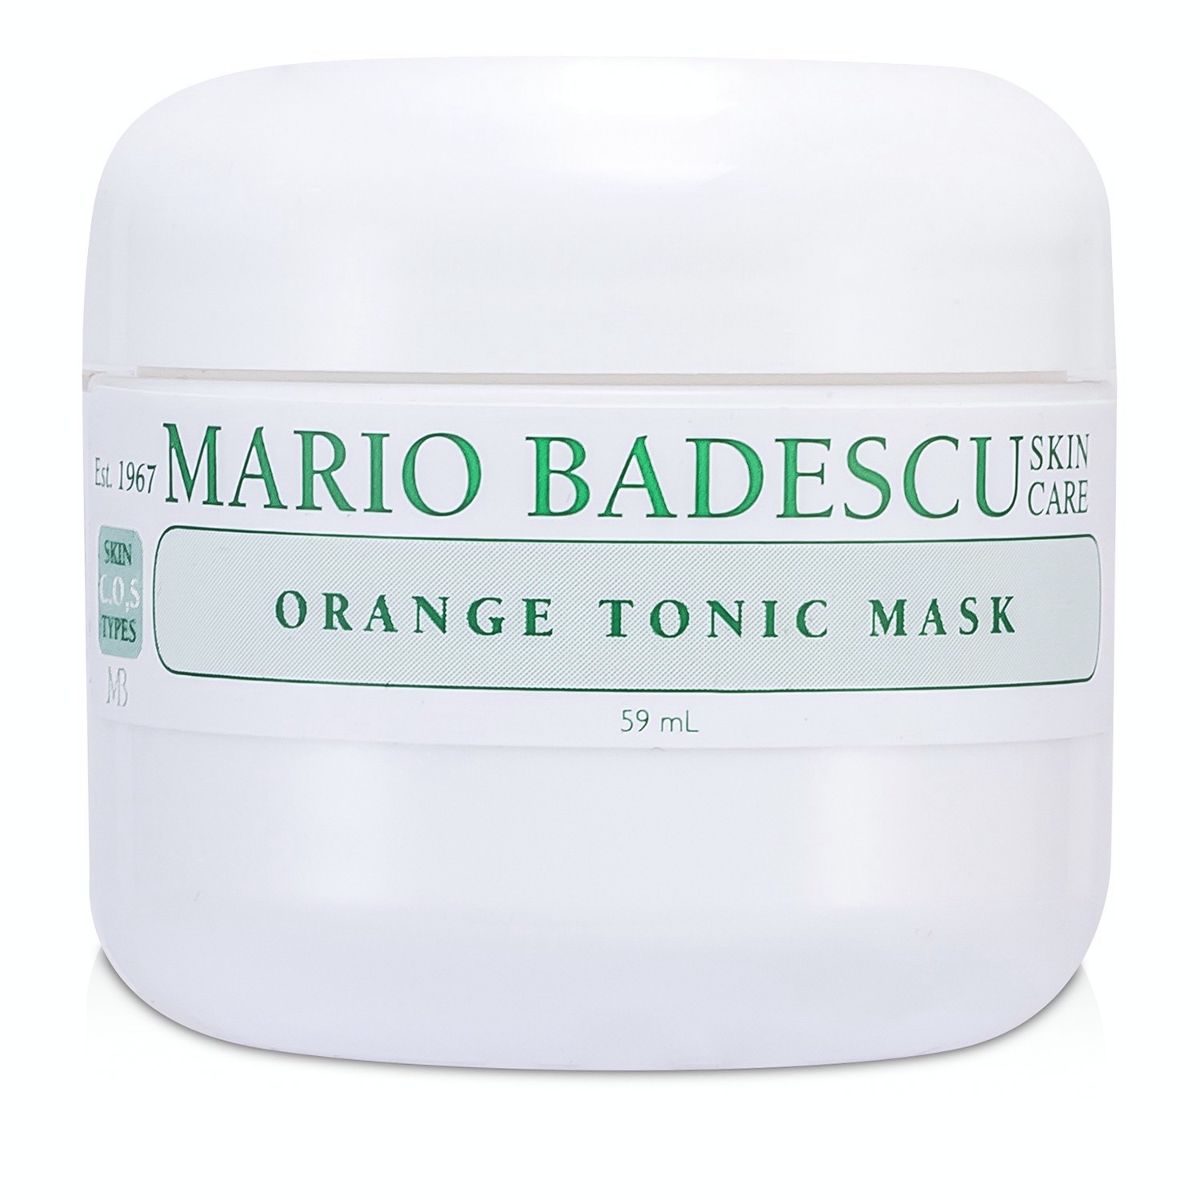 Orange Tonic Mask - For Combination/ Oily/ Sensitive Skin Types Mario Badescu Image